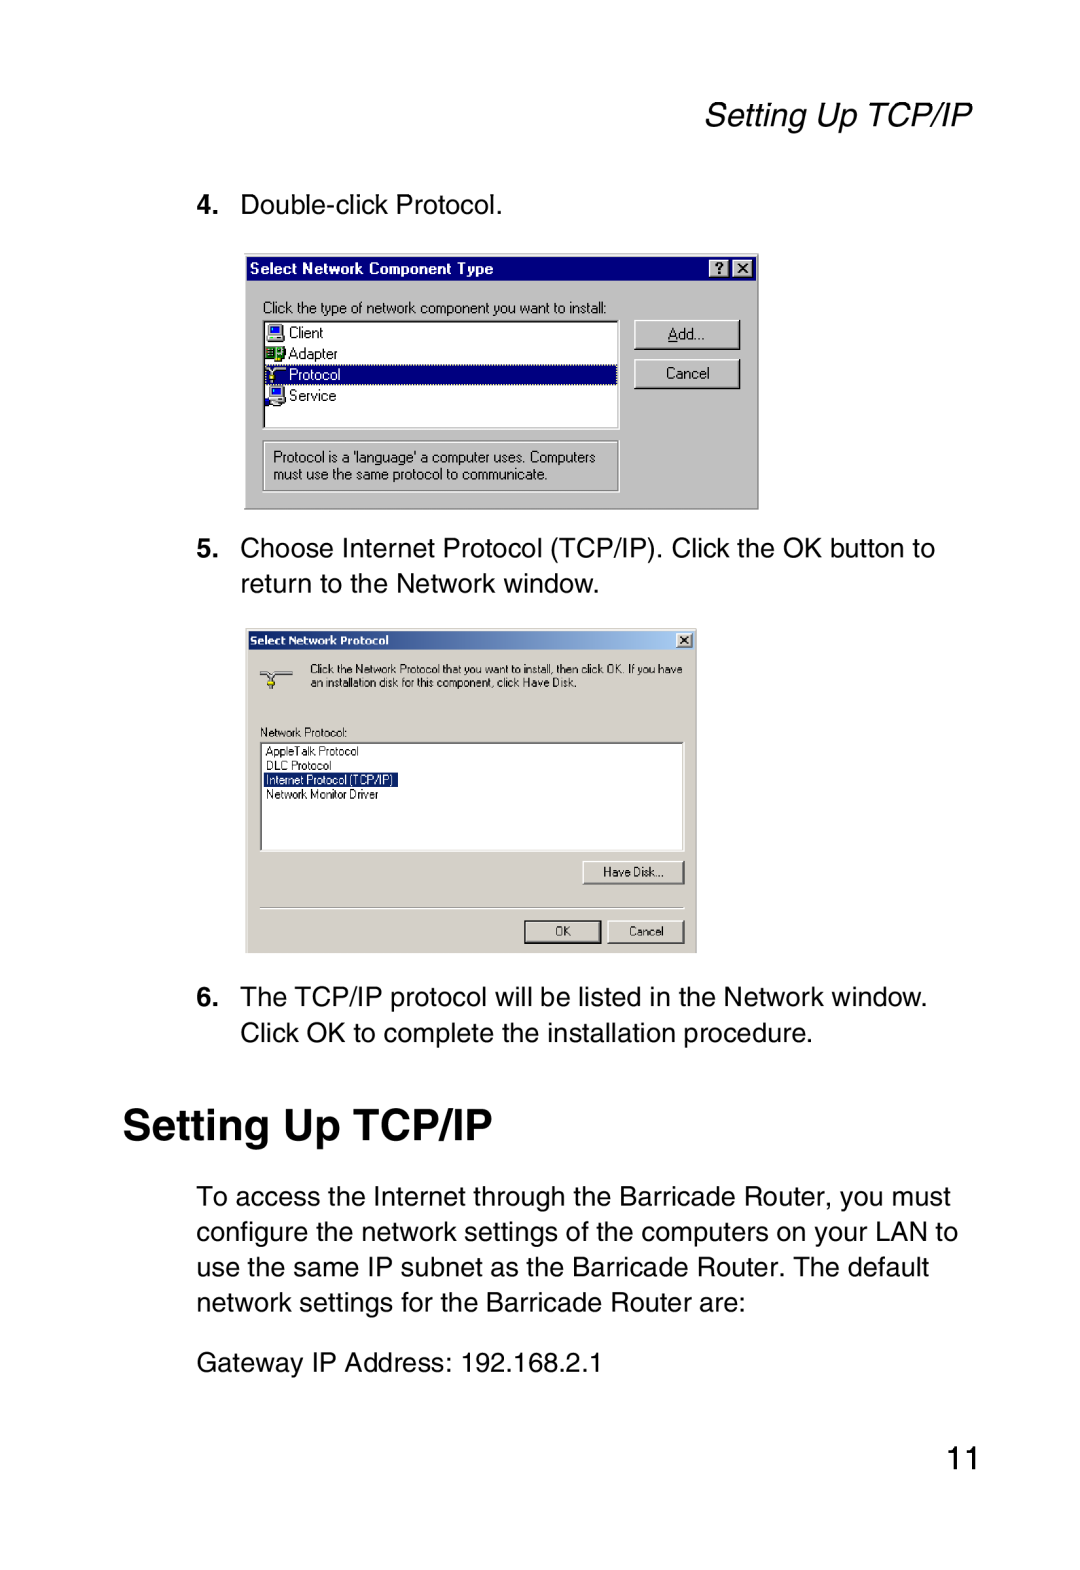 Sharp S M C 7 0 0 4 A B R, SMC7004ABR manual Setting Up TCP/IP 